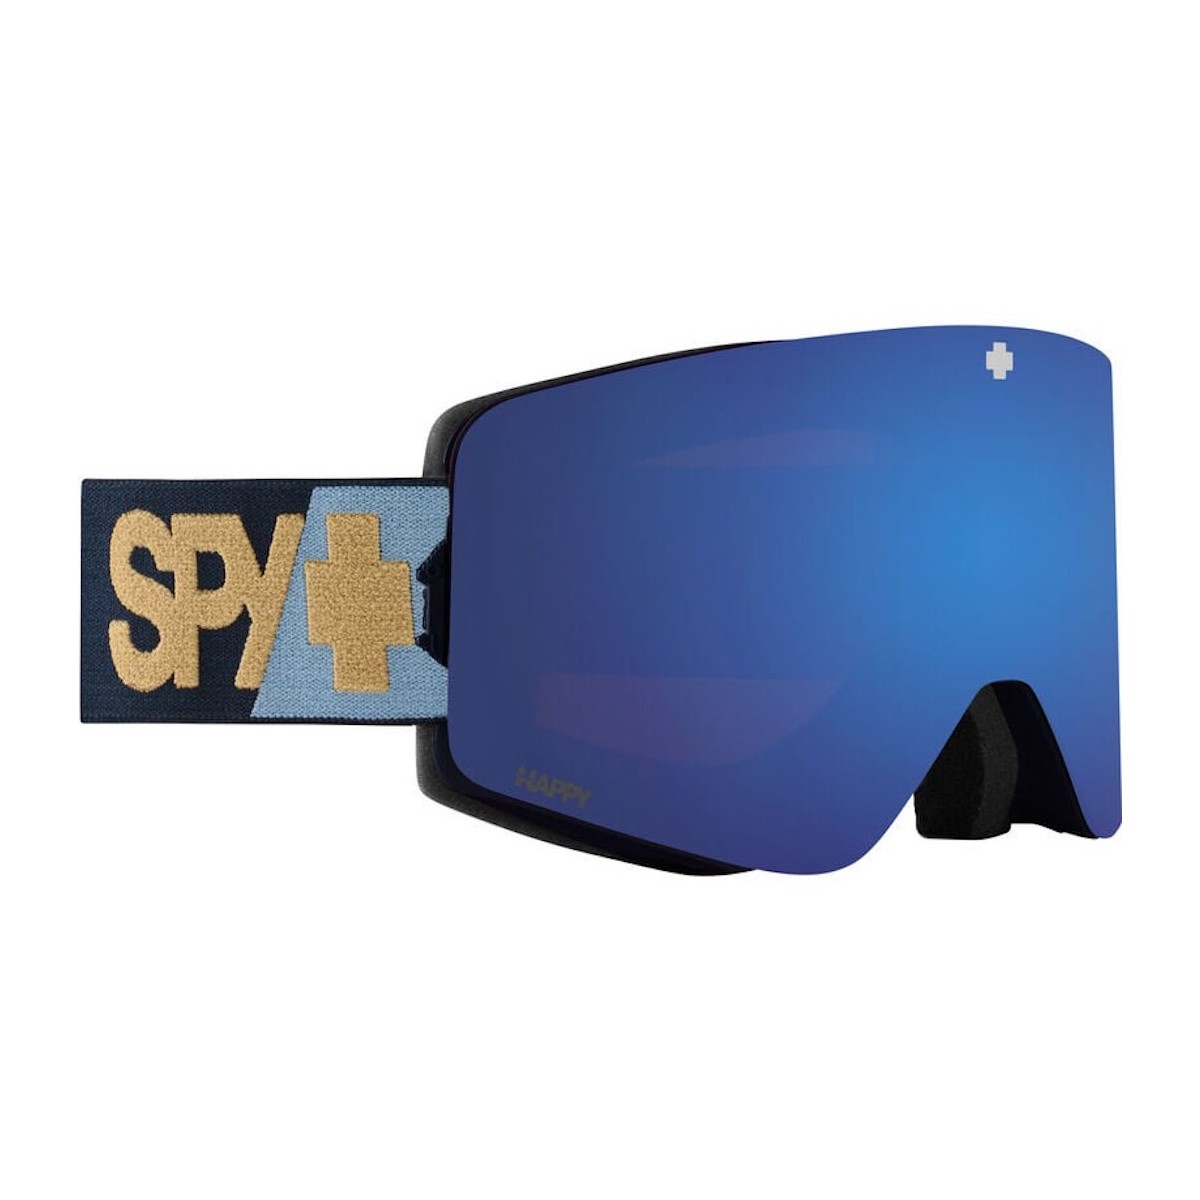 SPY MARAUDER ELITE SNOW goggles - dark blue